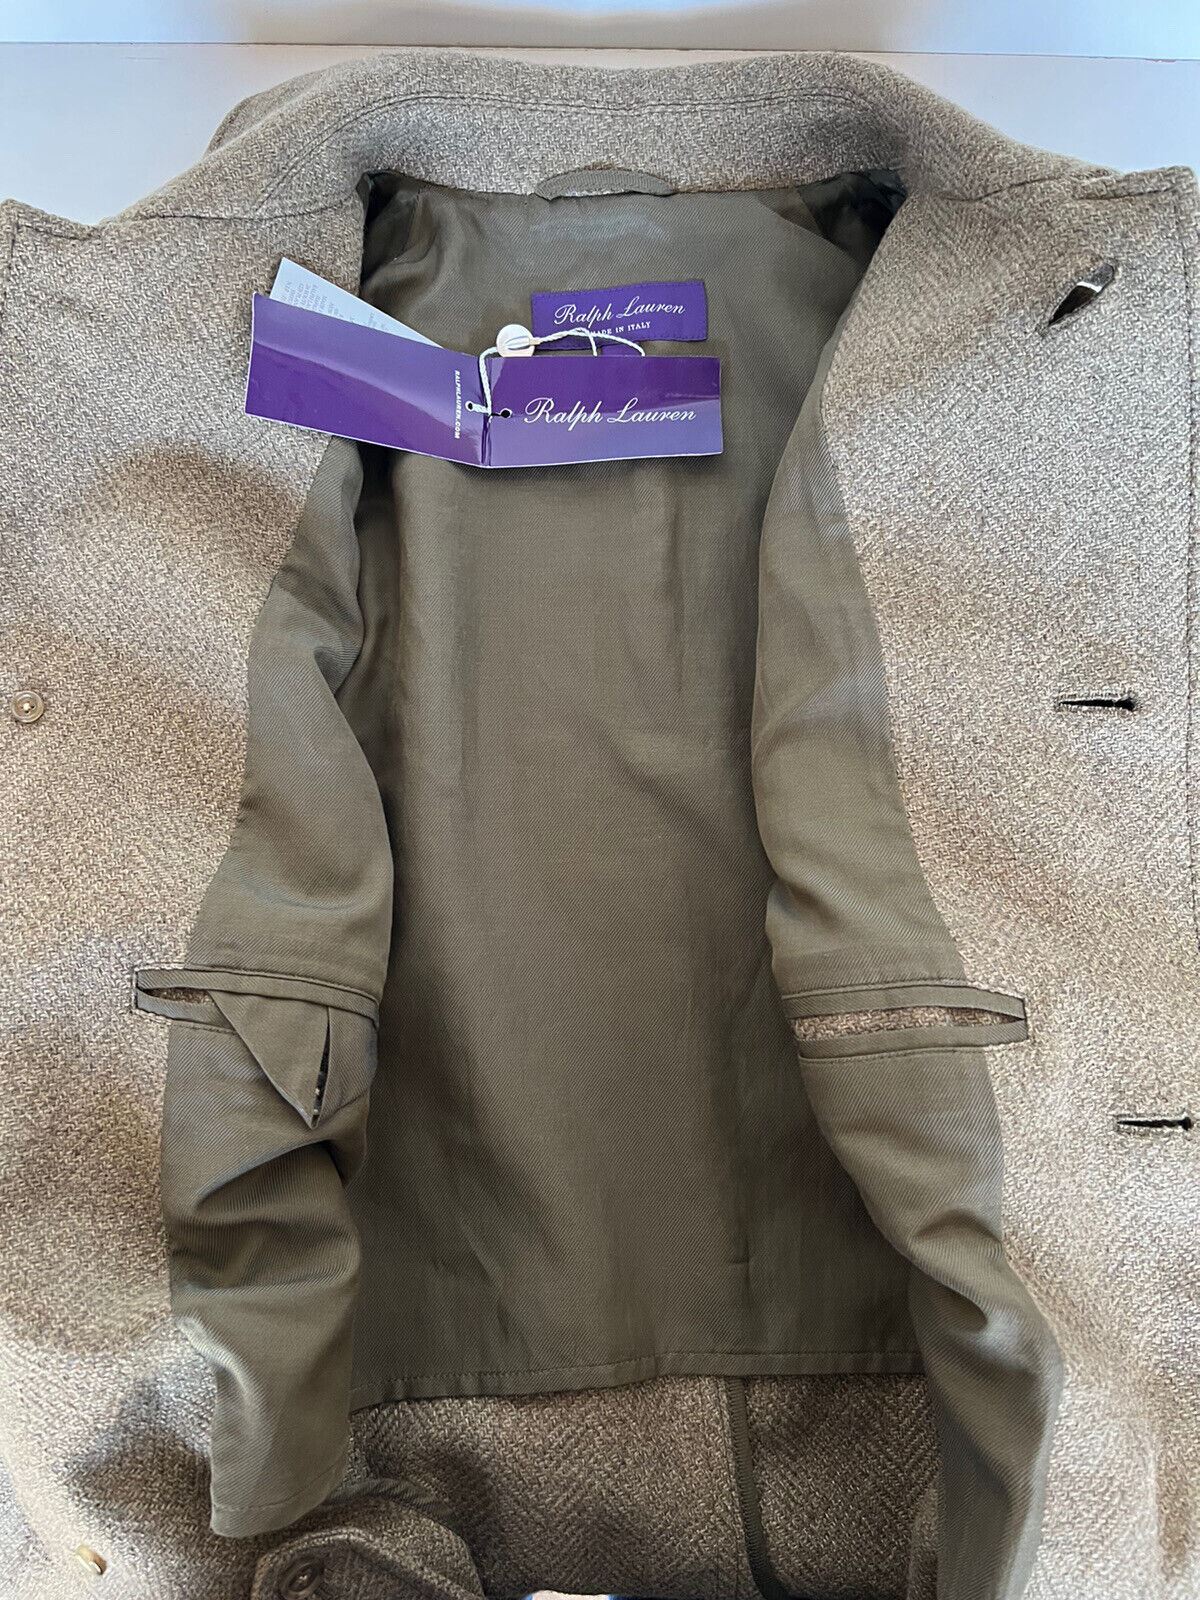 NWT $2995 Ralph Lauren Purple Label Мужское пальто из шерсти и шелка зеленого цвета, размер 40, Италия 